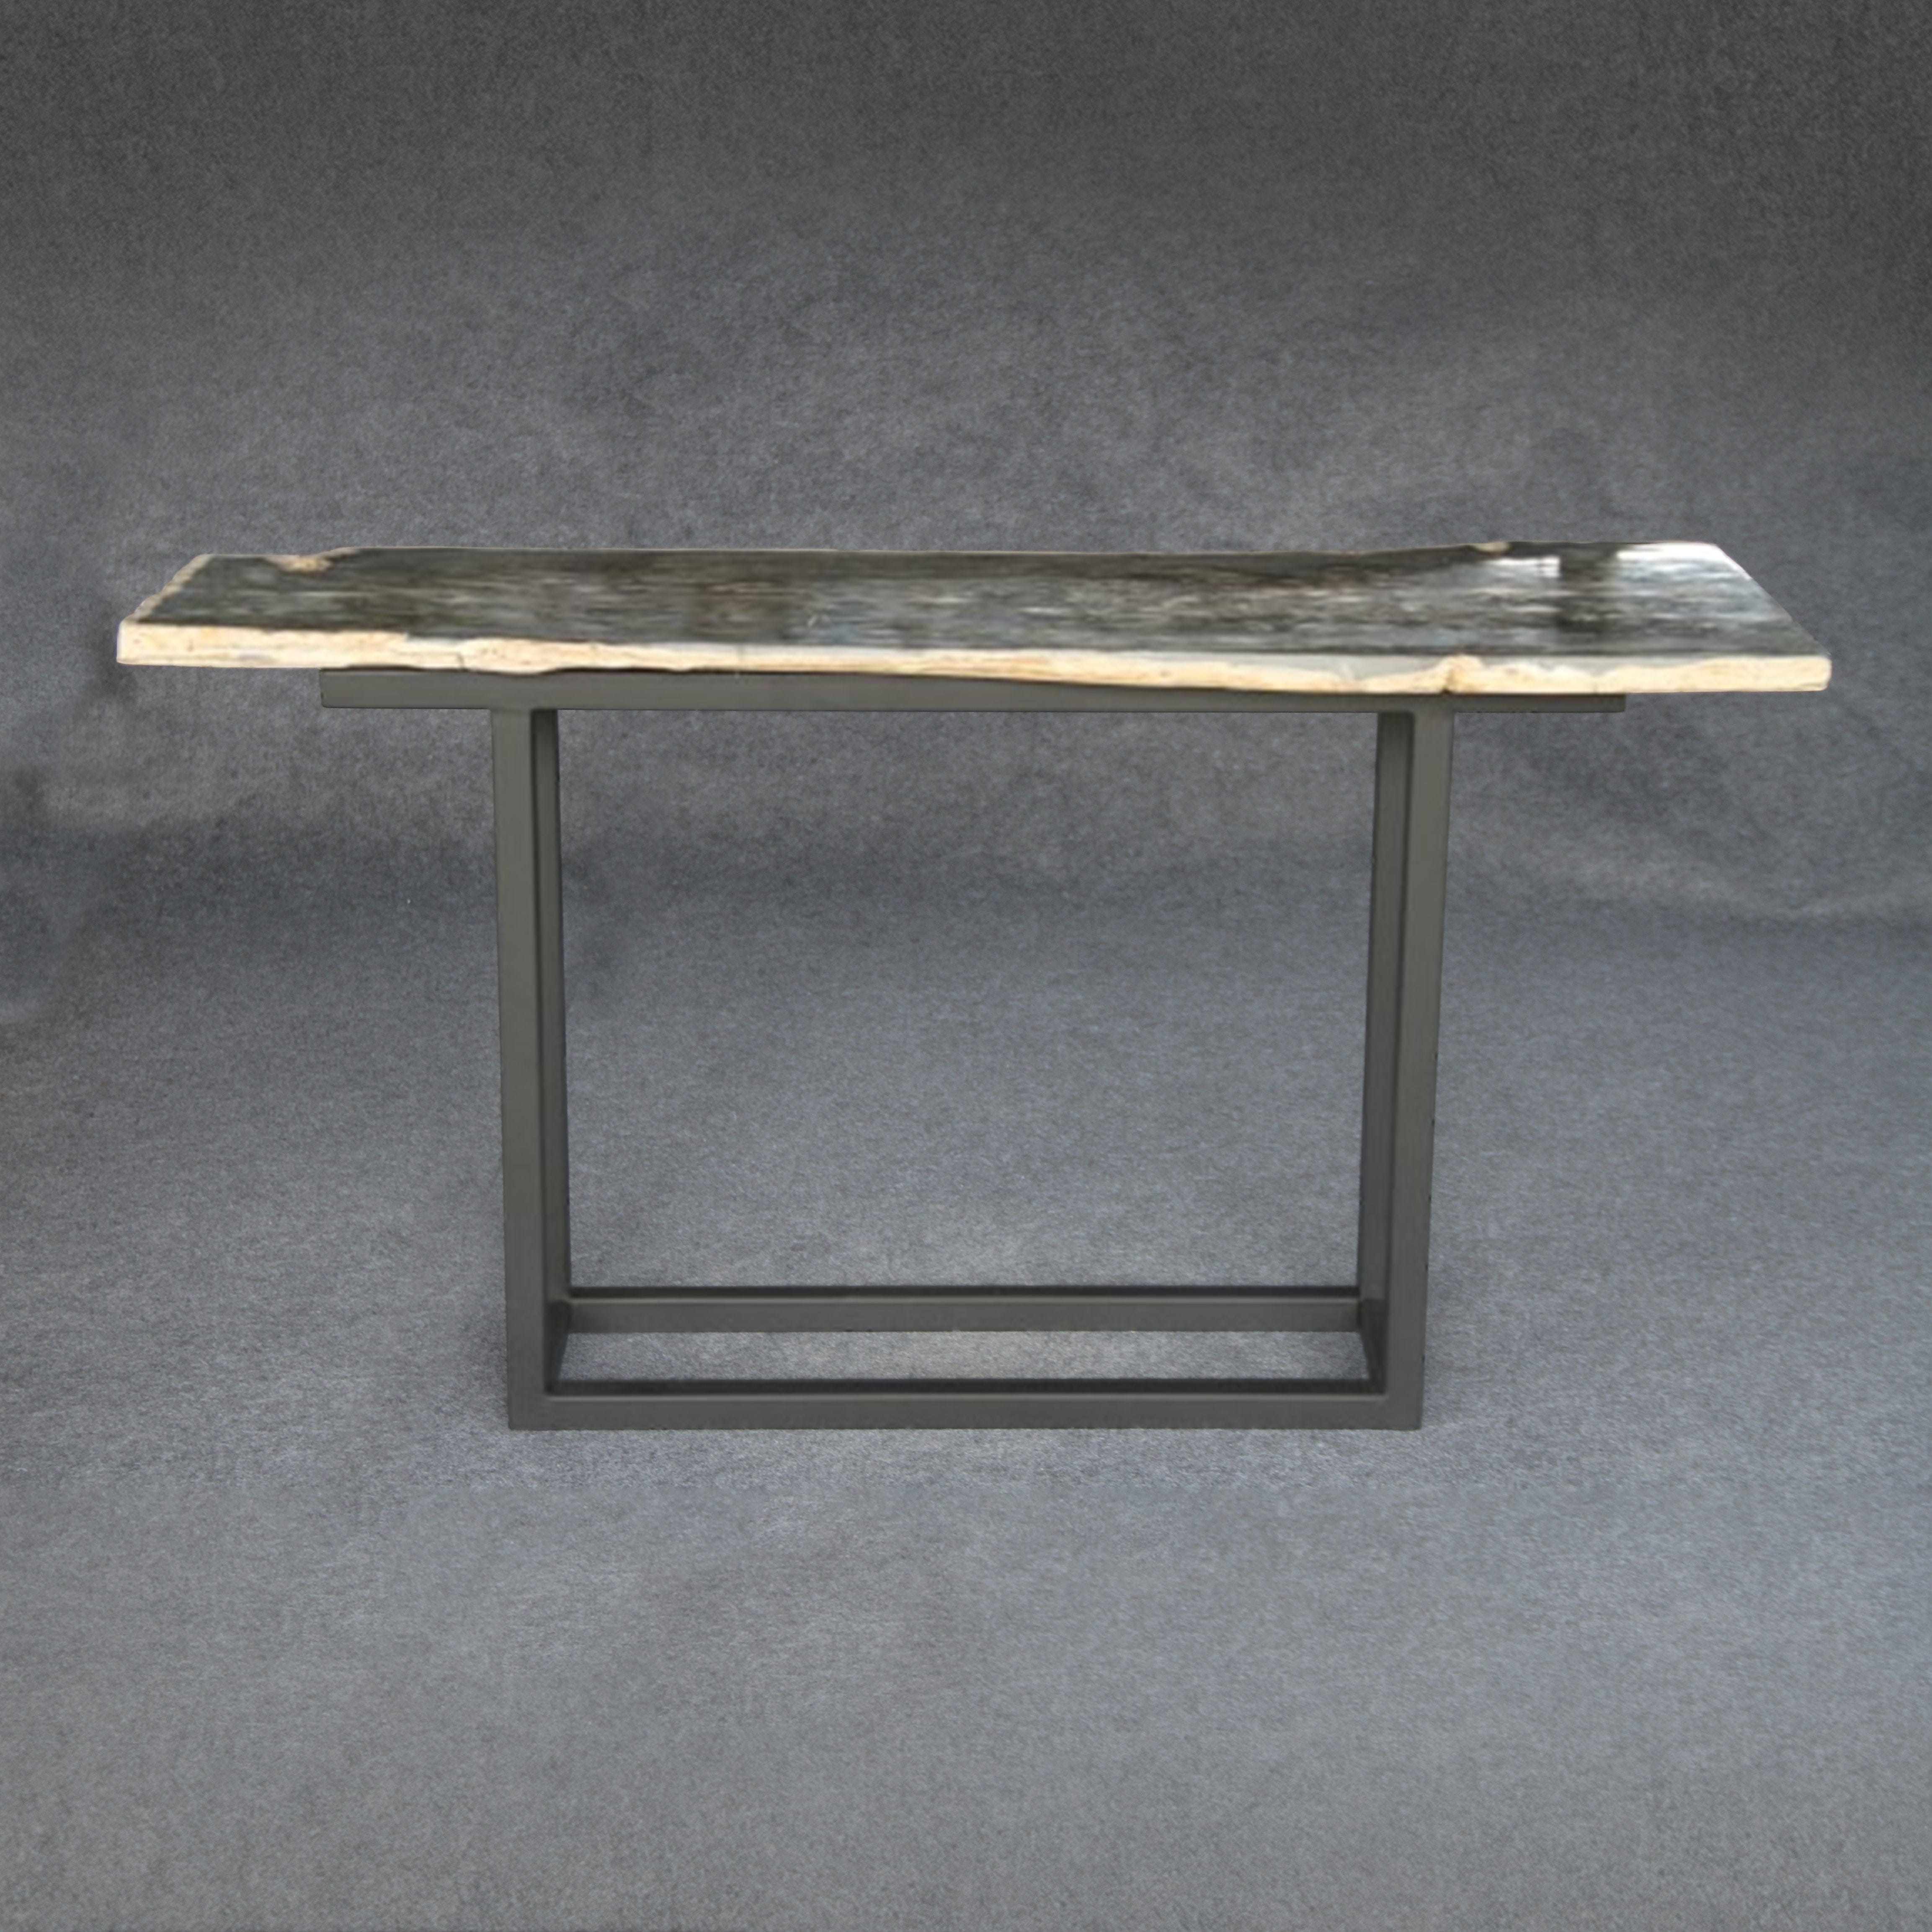 Kalifano Petrified Wood Petrified Wood Console Table 63" / 132 lbs PWR6800.004